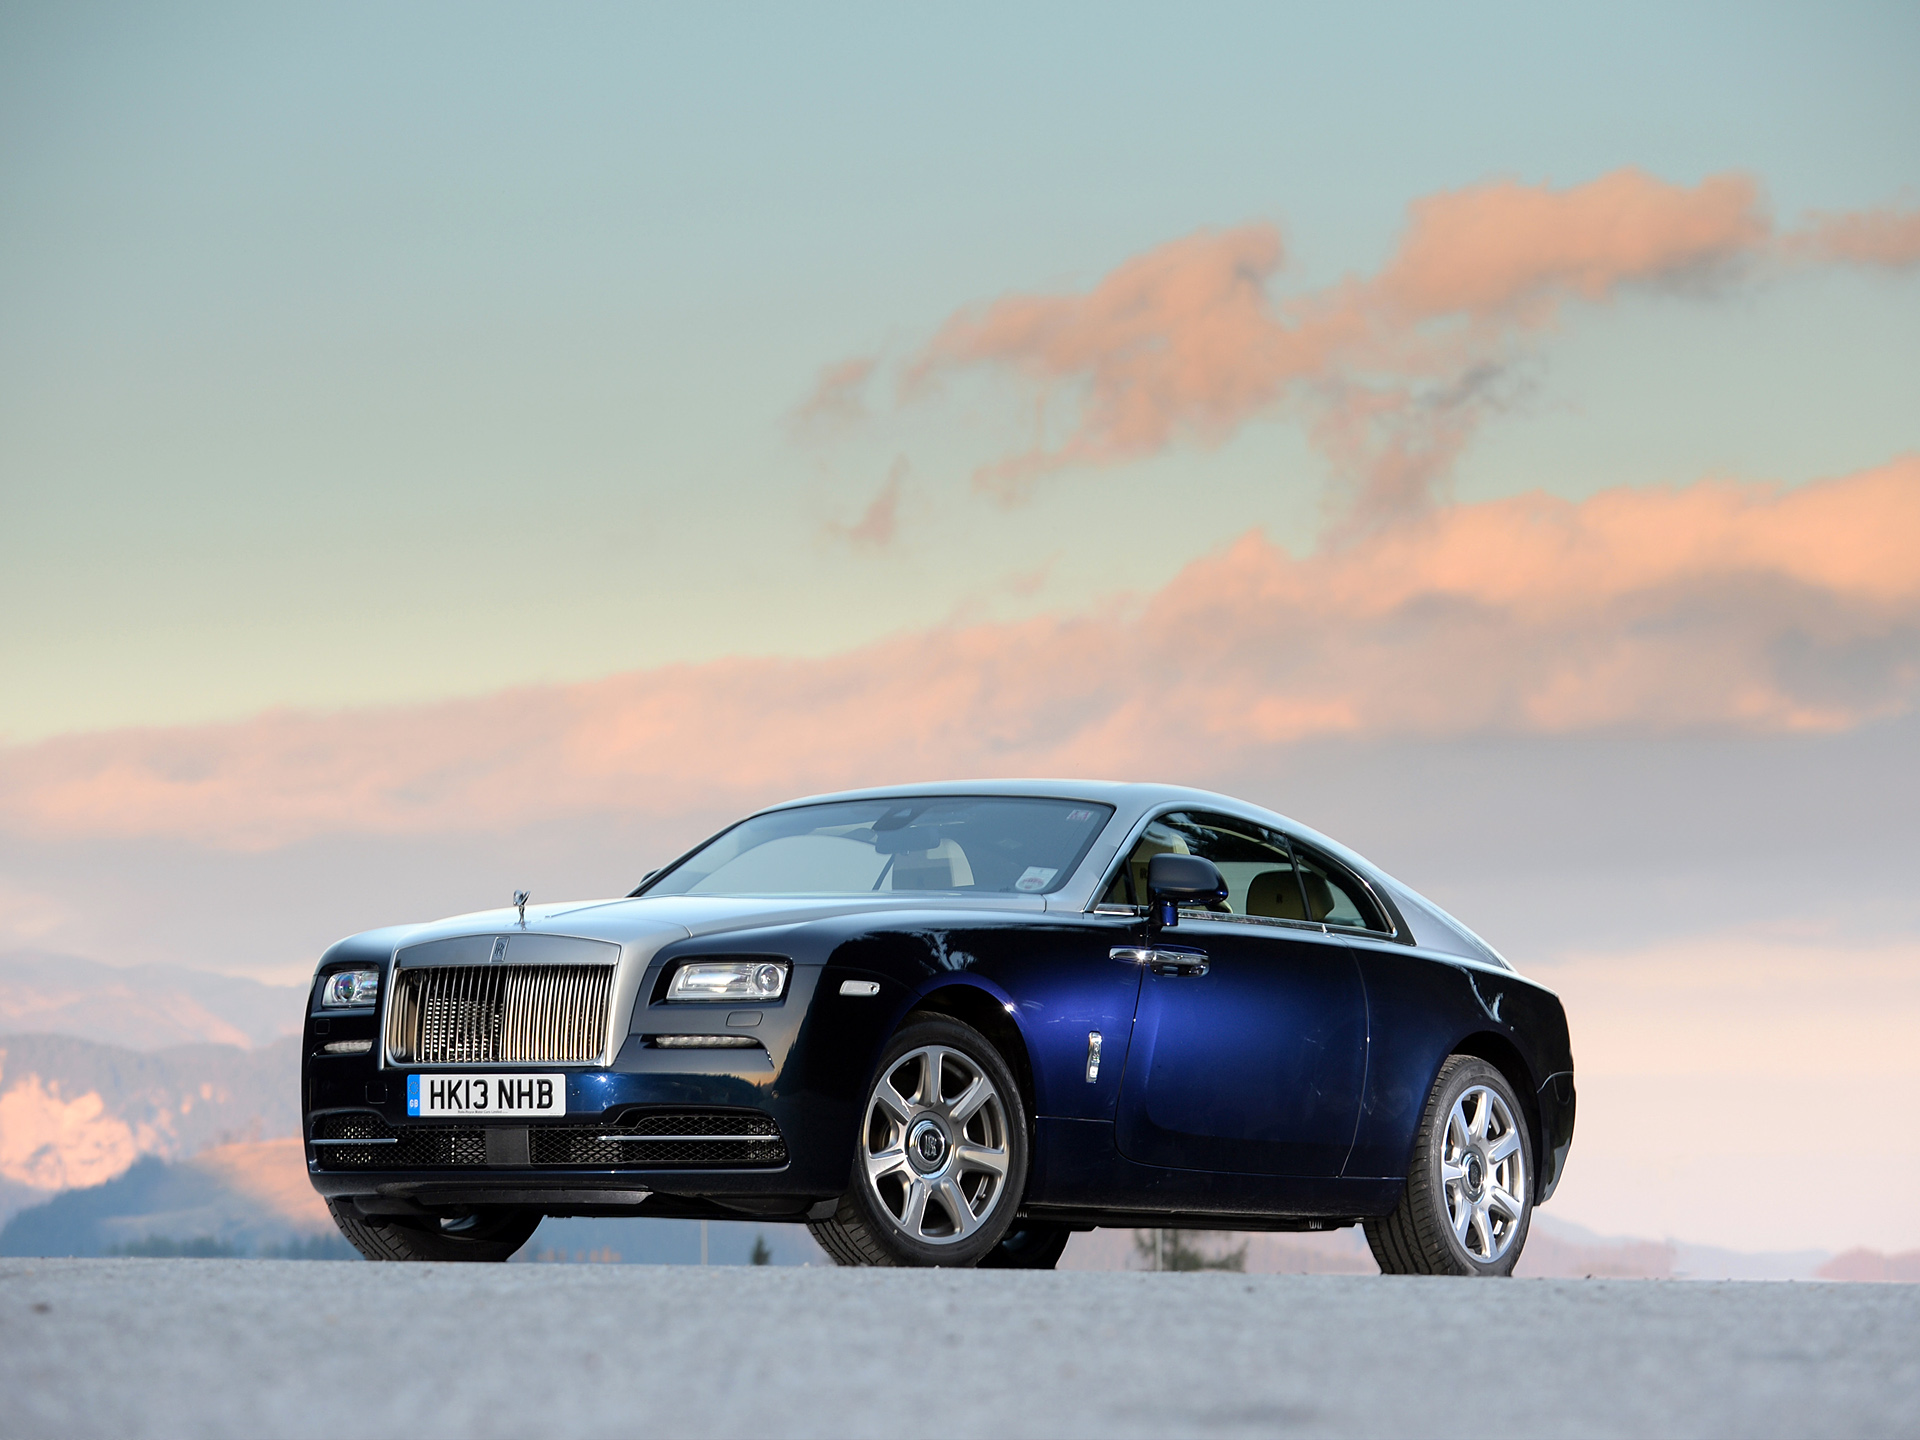  2014 Rolls-Royce Wraith Wallpaper.